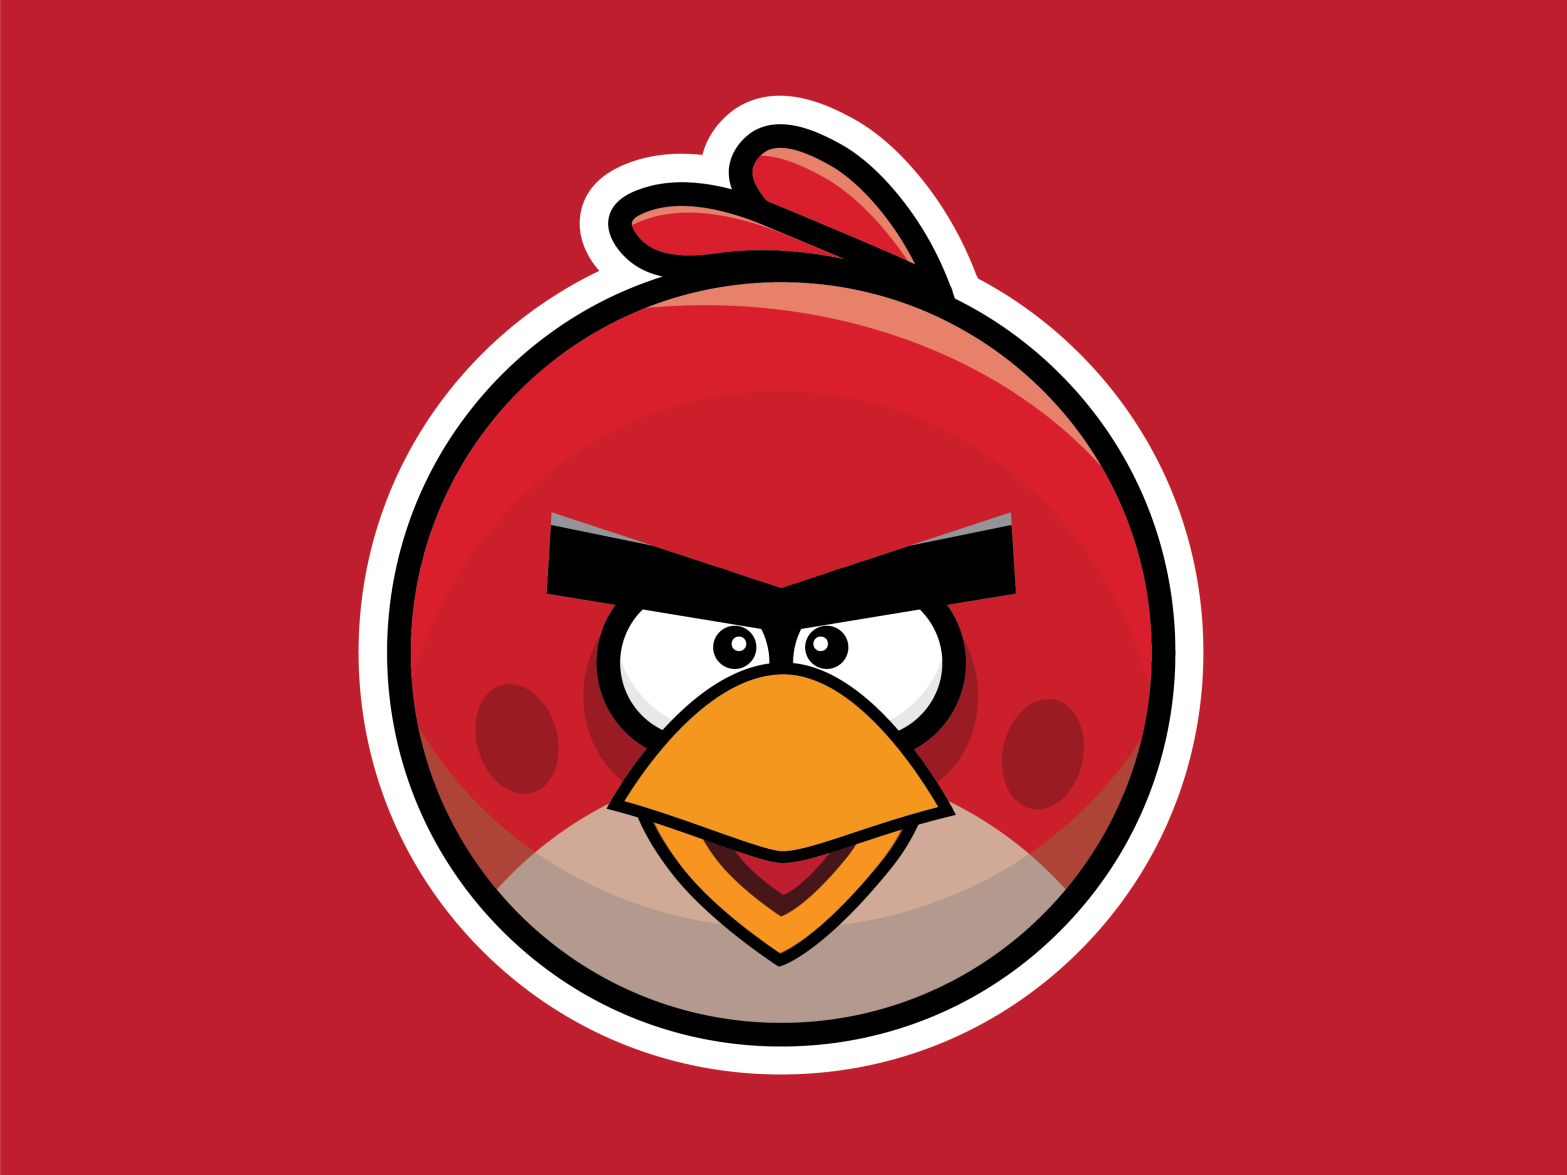 Sticker Angry Bird Red by vijaykmalabar on Dribbble